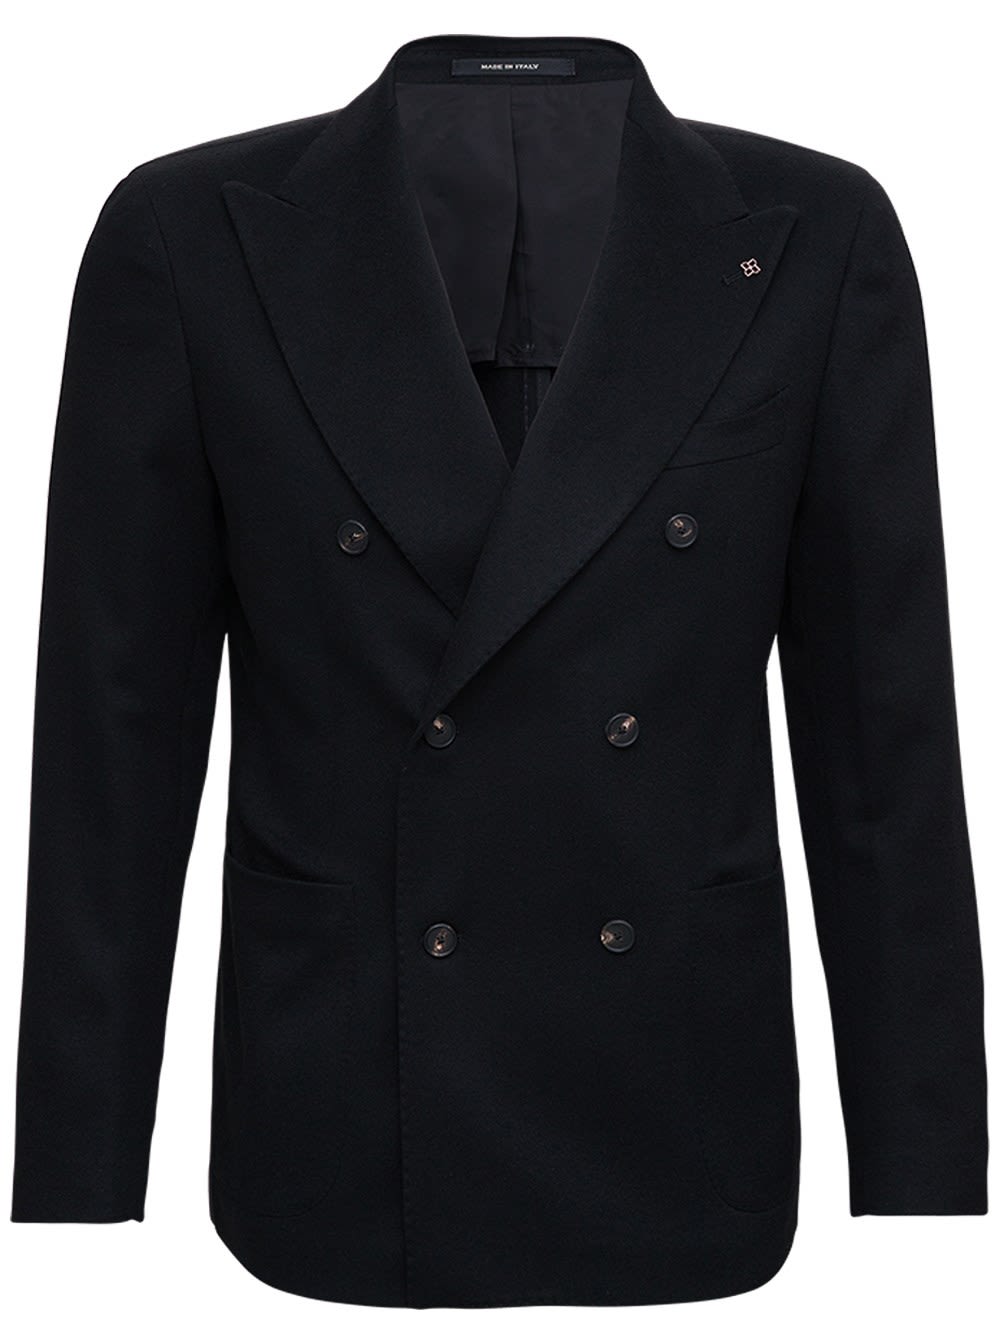 Tagliatore Double-breasted Black Wool Jacket